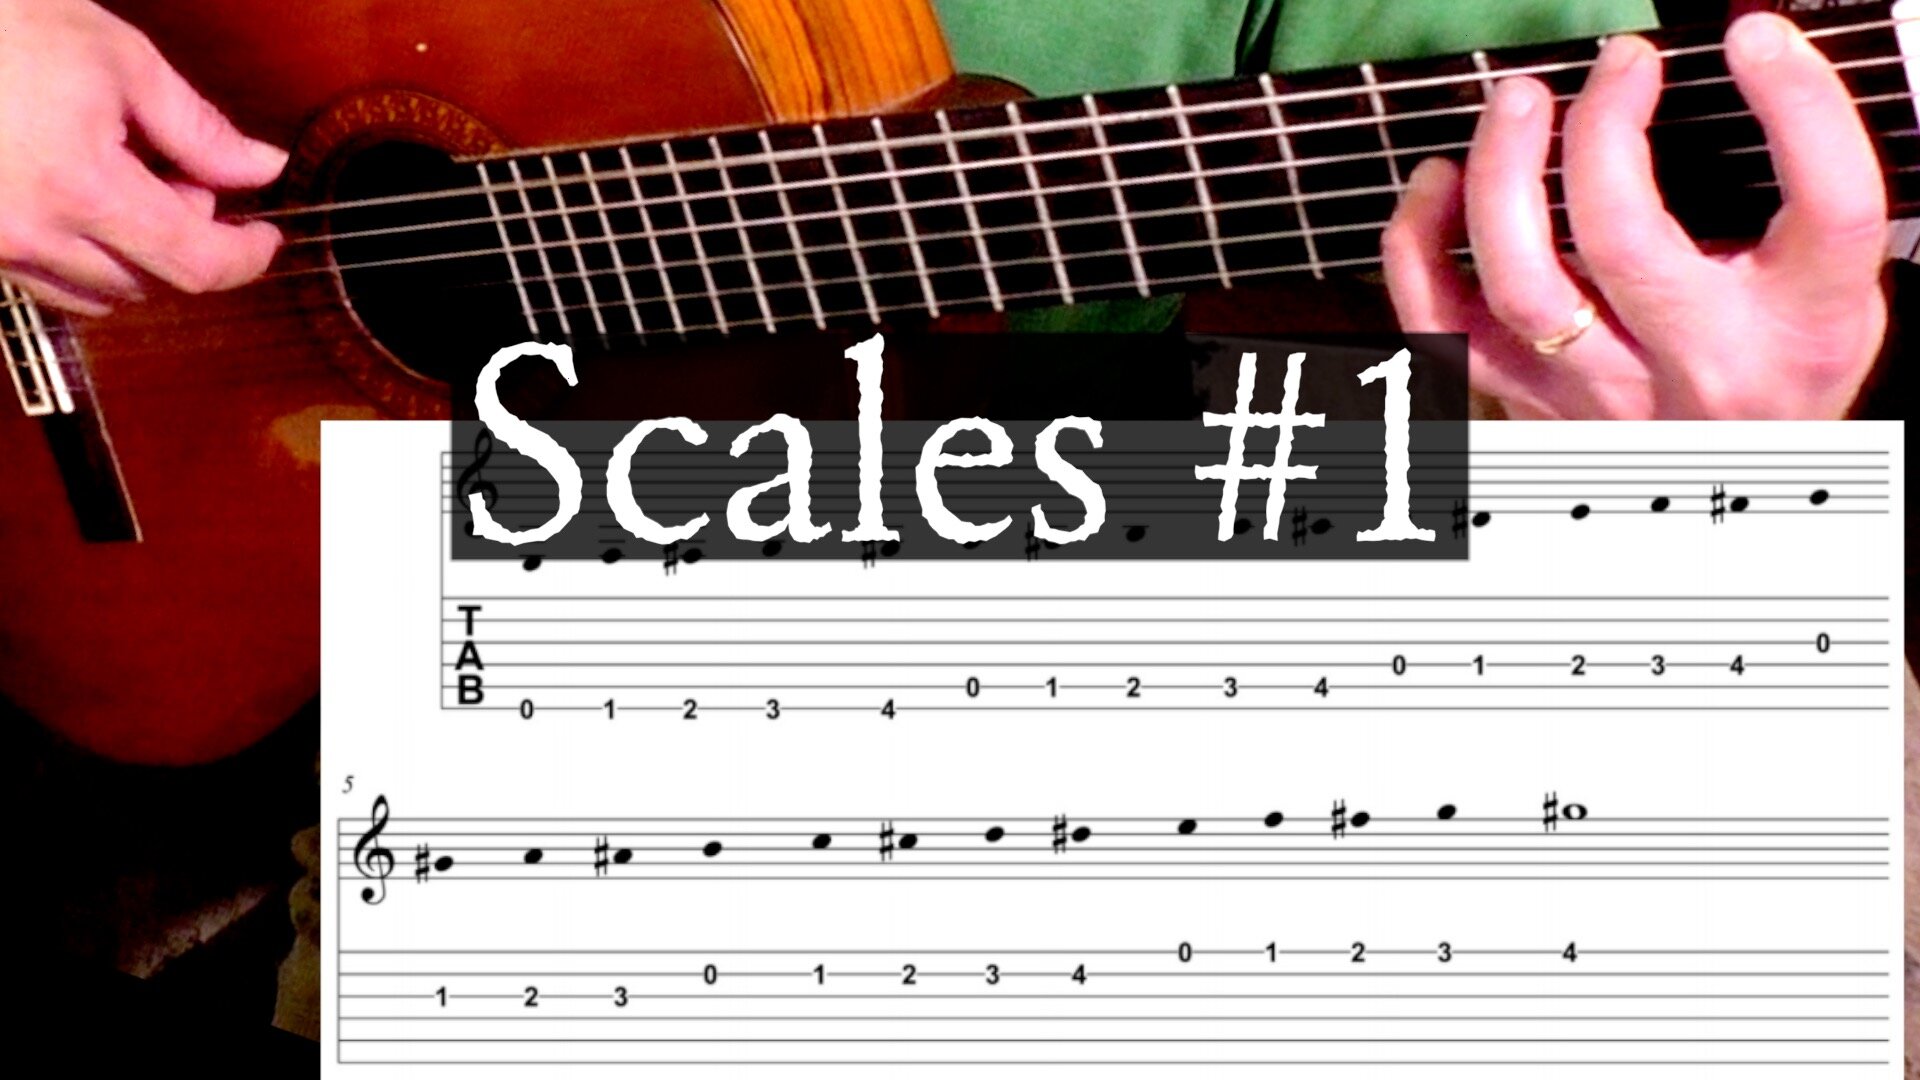 Scales #1 Thumbnail.jpg